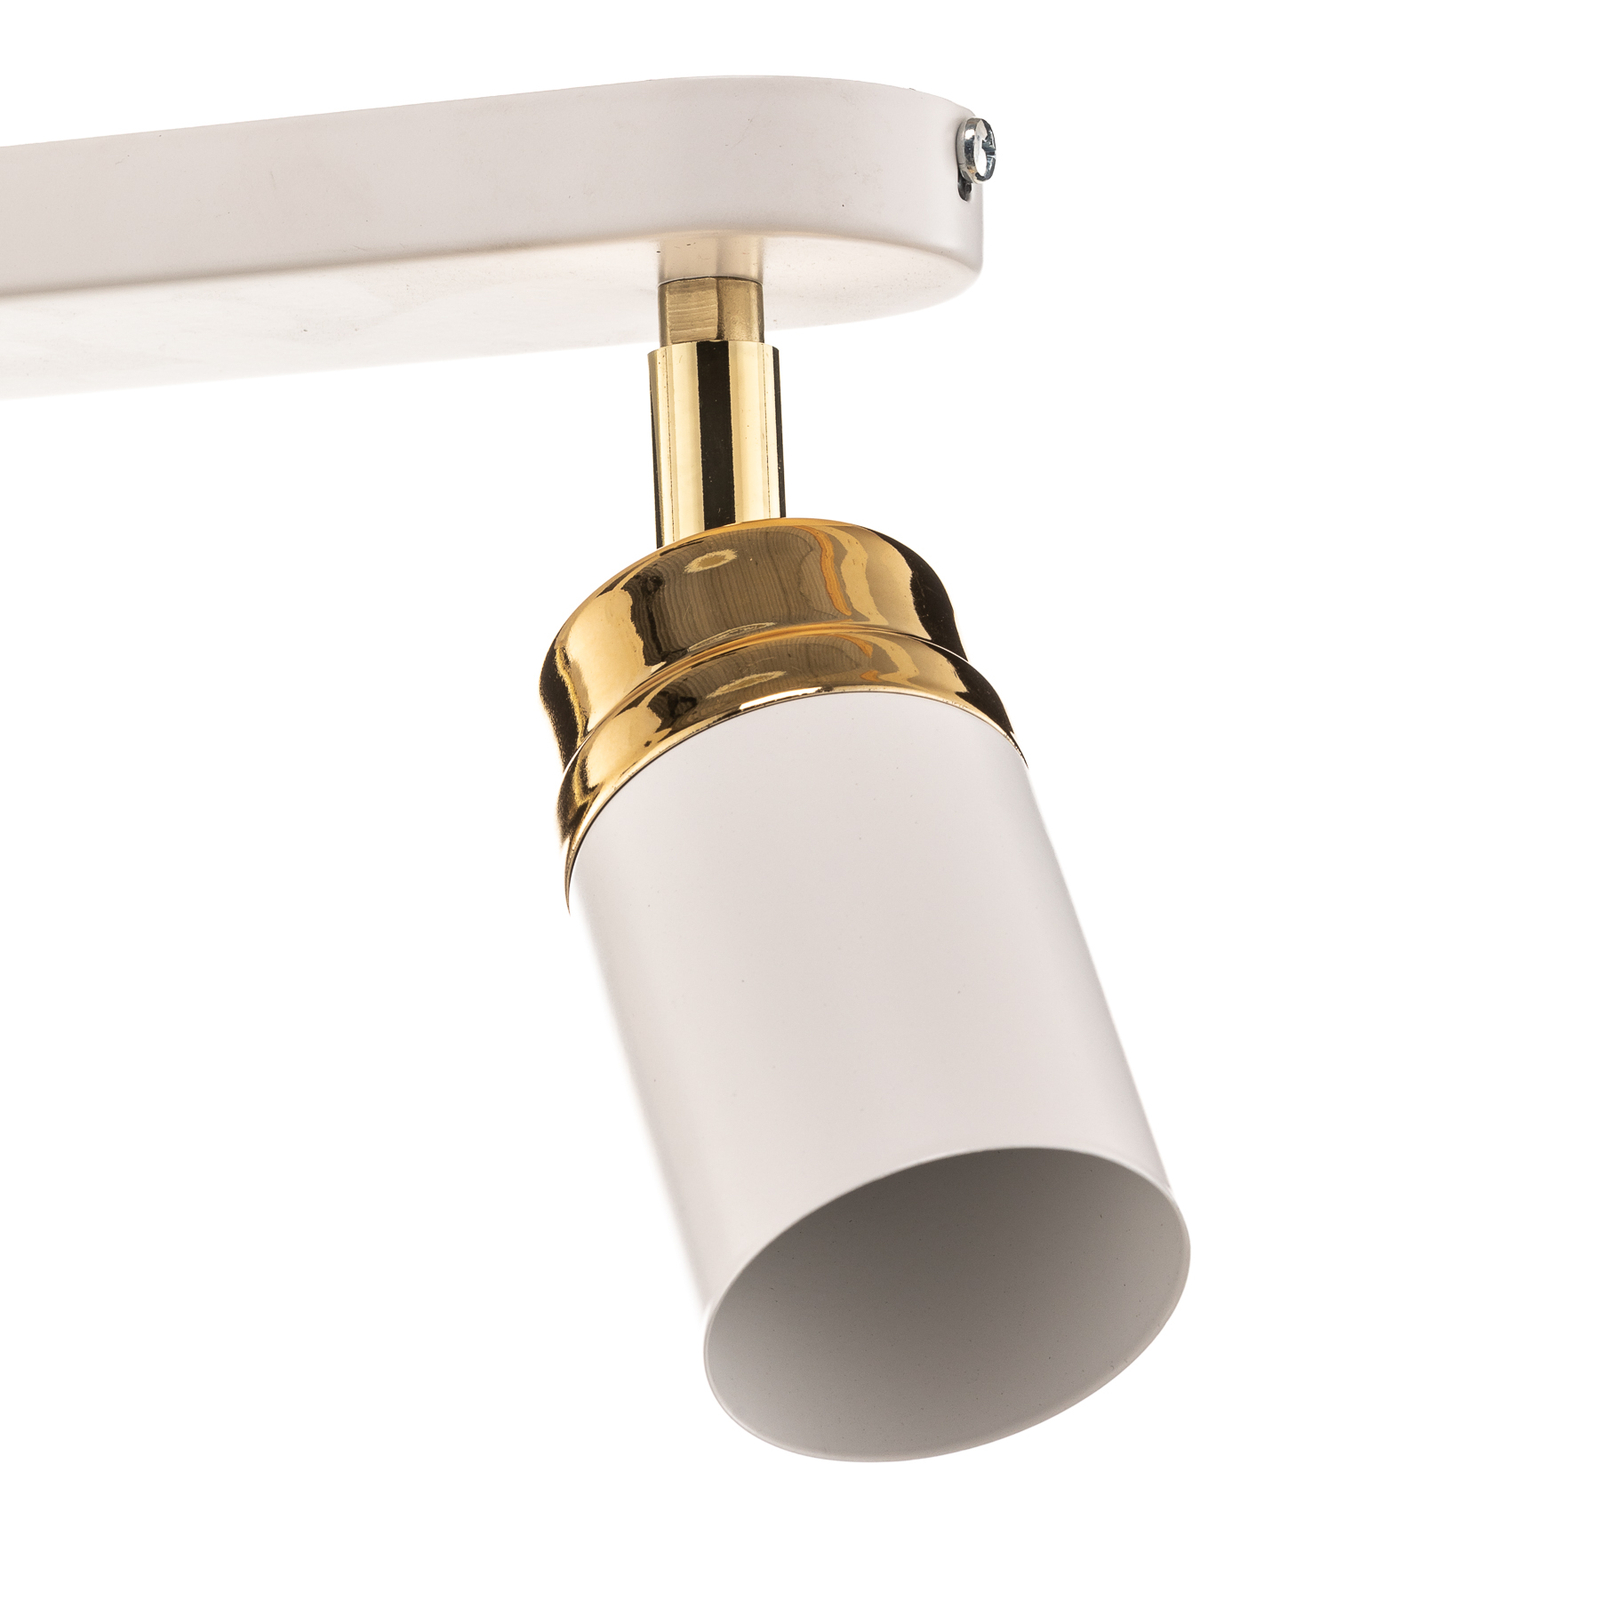 Rondo downlight white/gold, 2-bulb